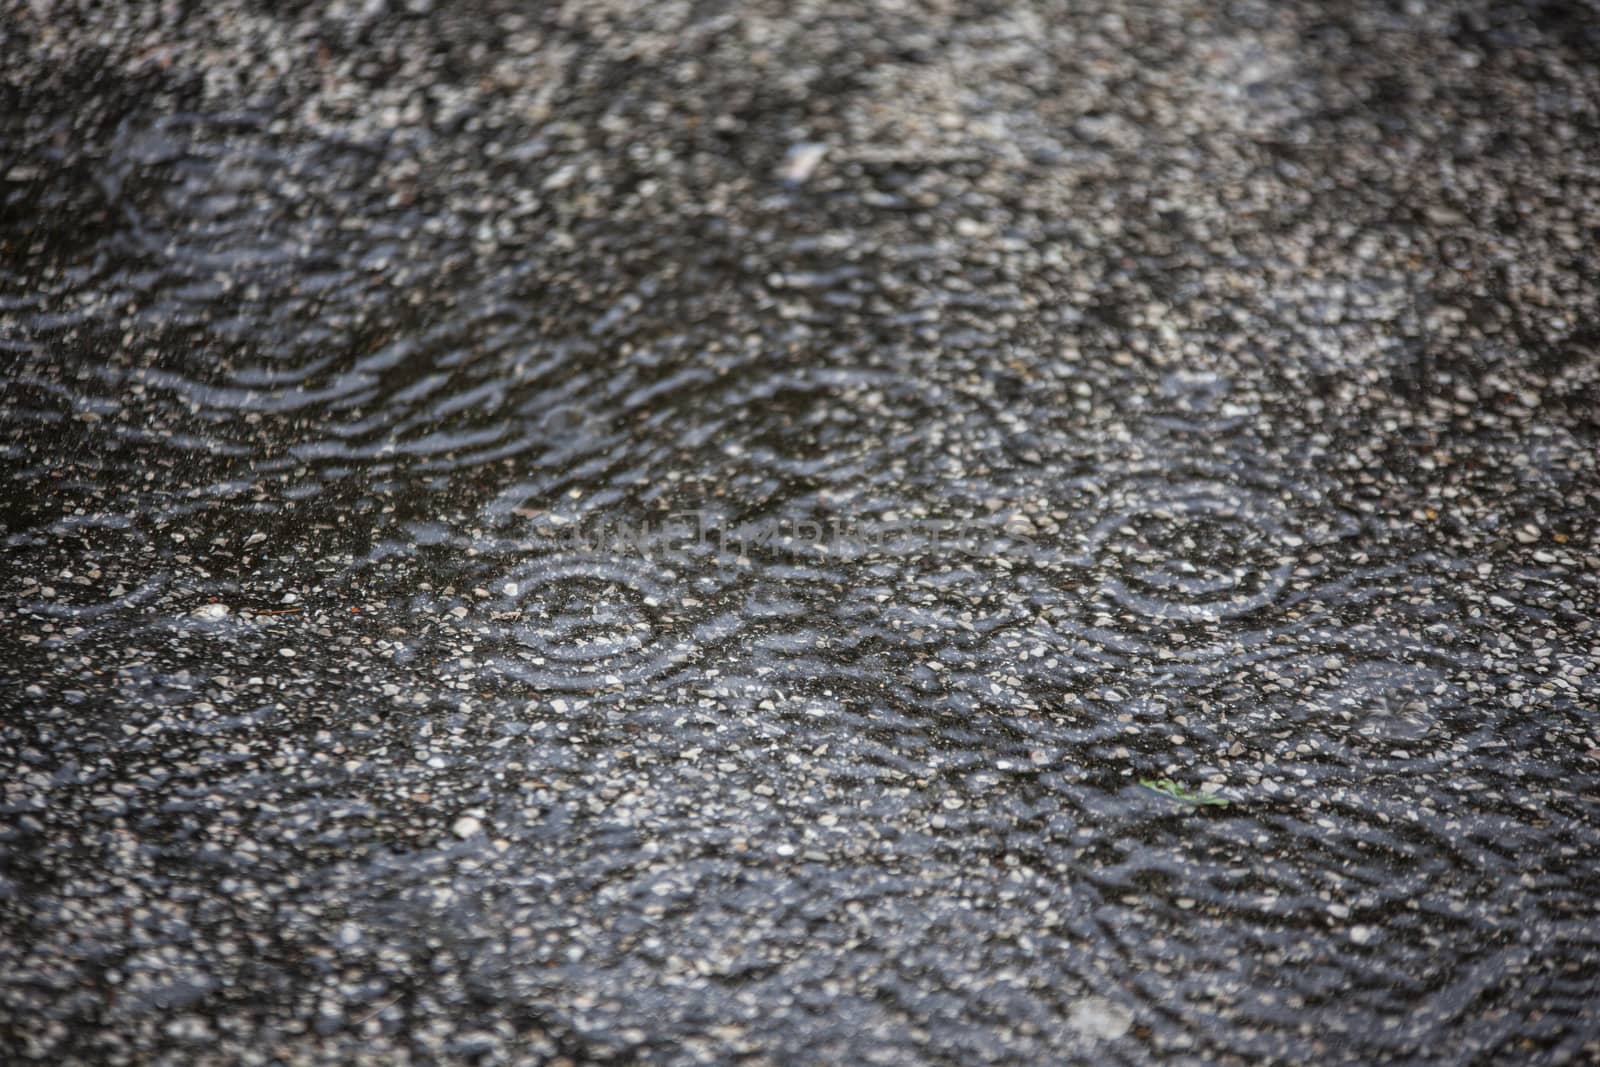 Asphalt with falling rain drops 2 by pippocarlot